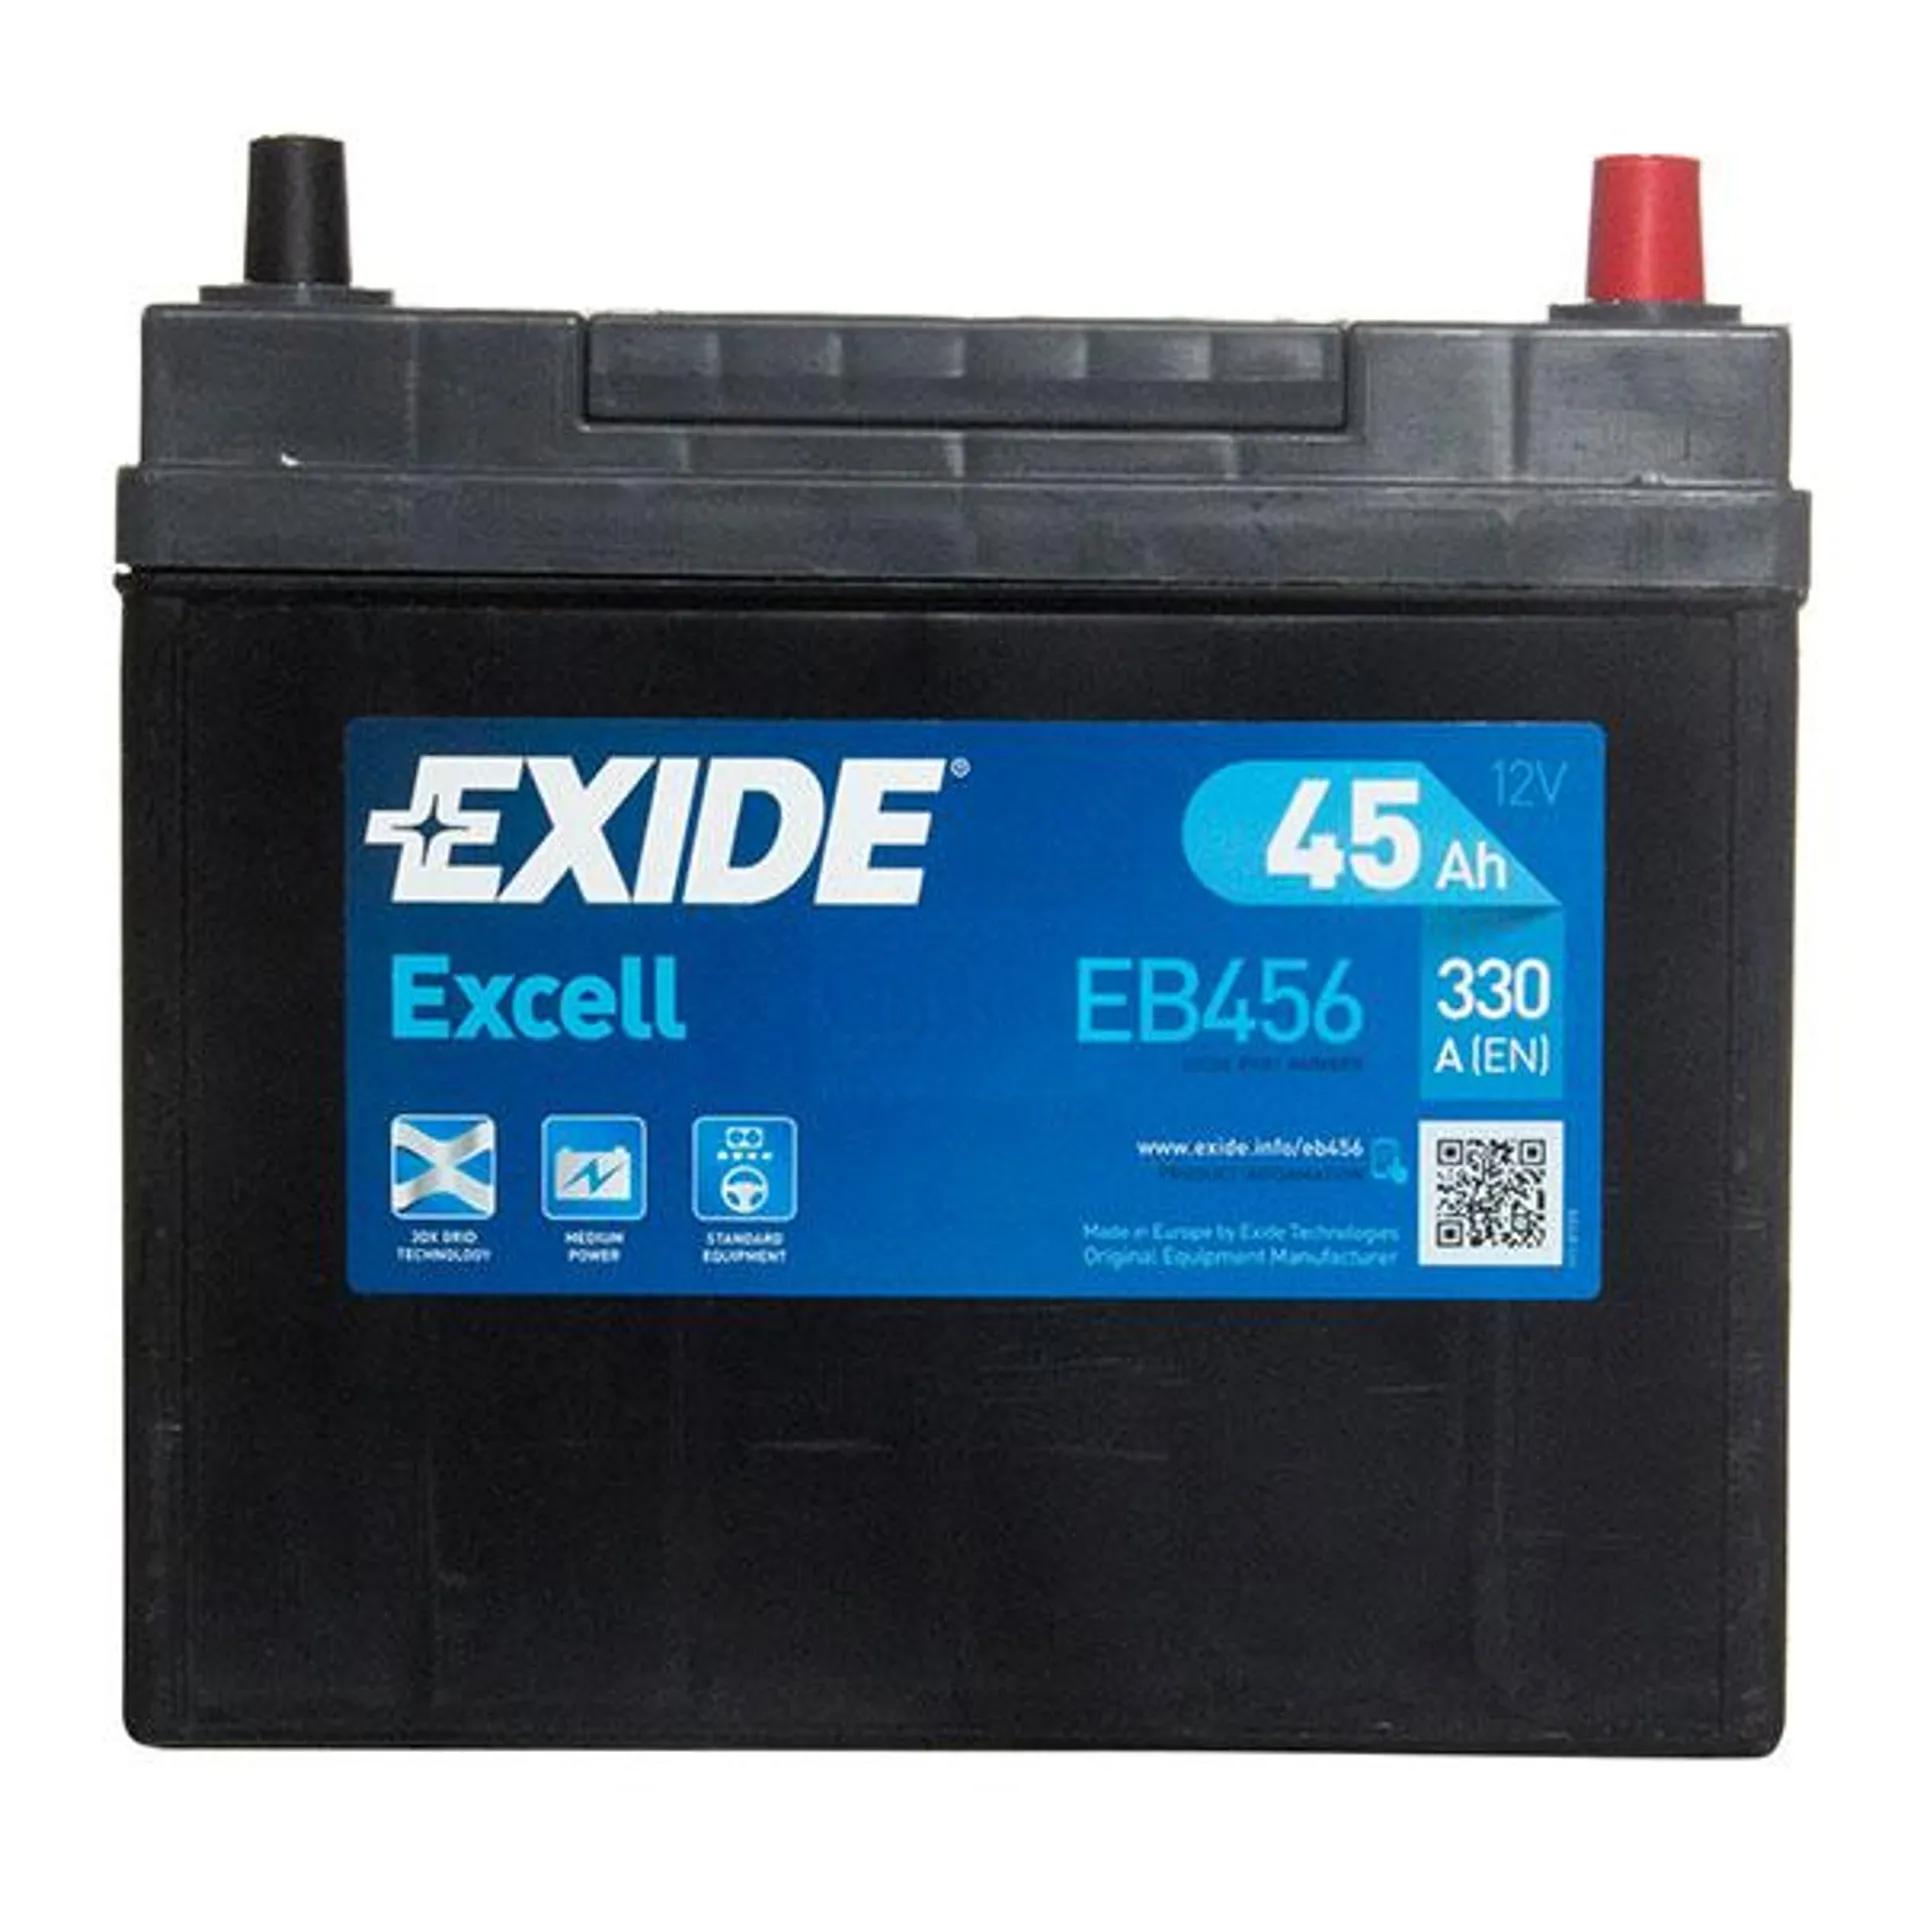 Exide Excel Car Battery 156 - 3 Year Guarantee